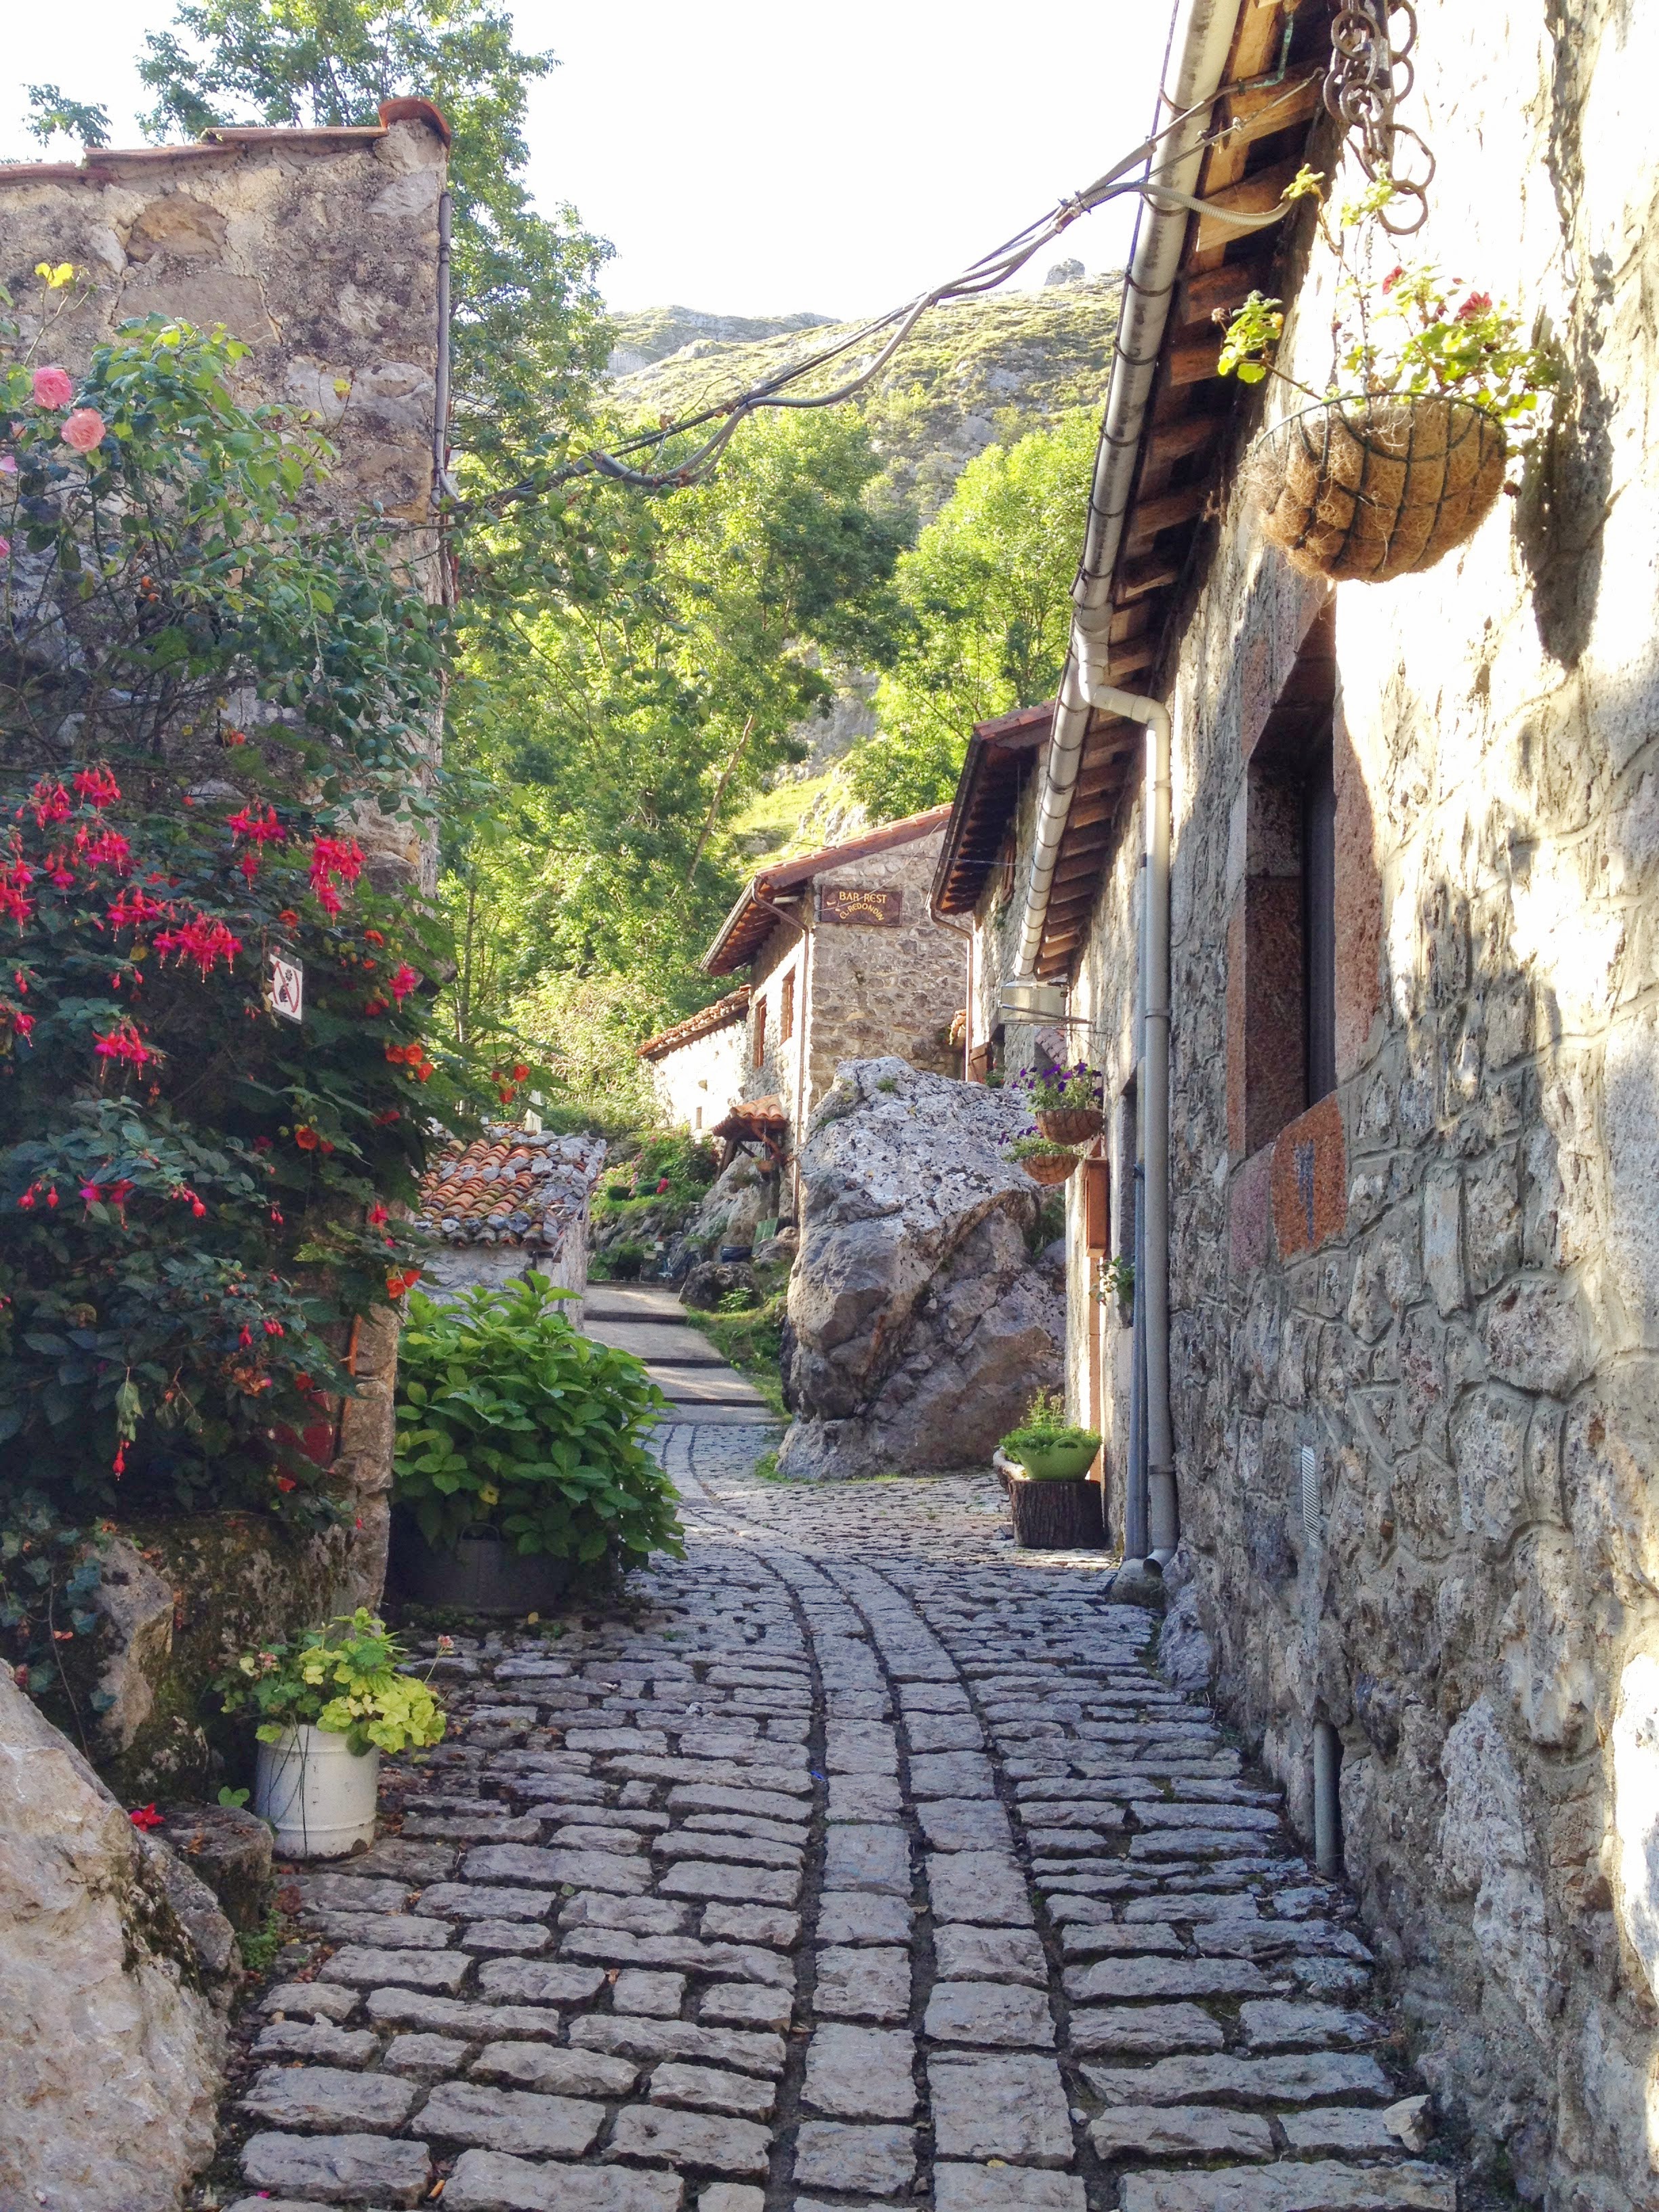 The village of Lower Bulnes